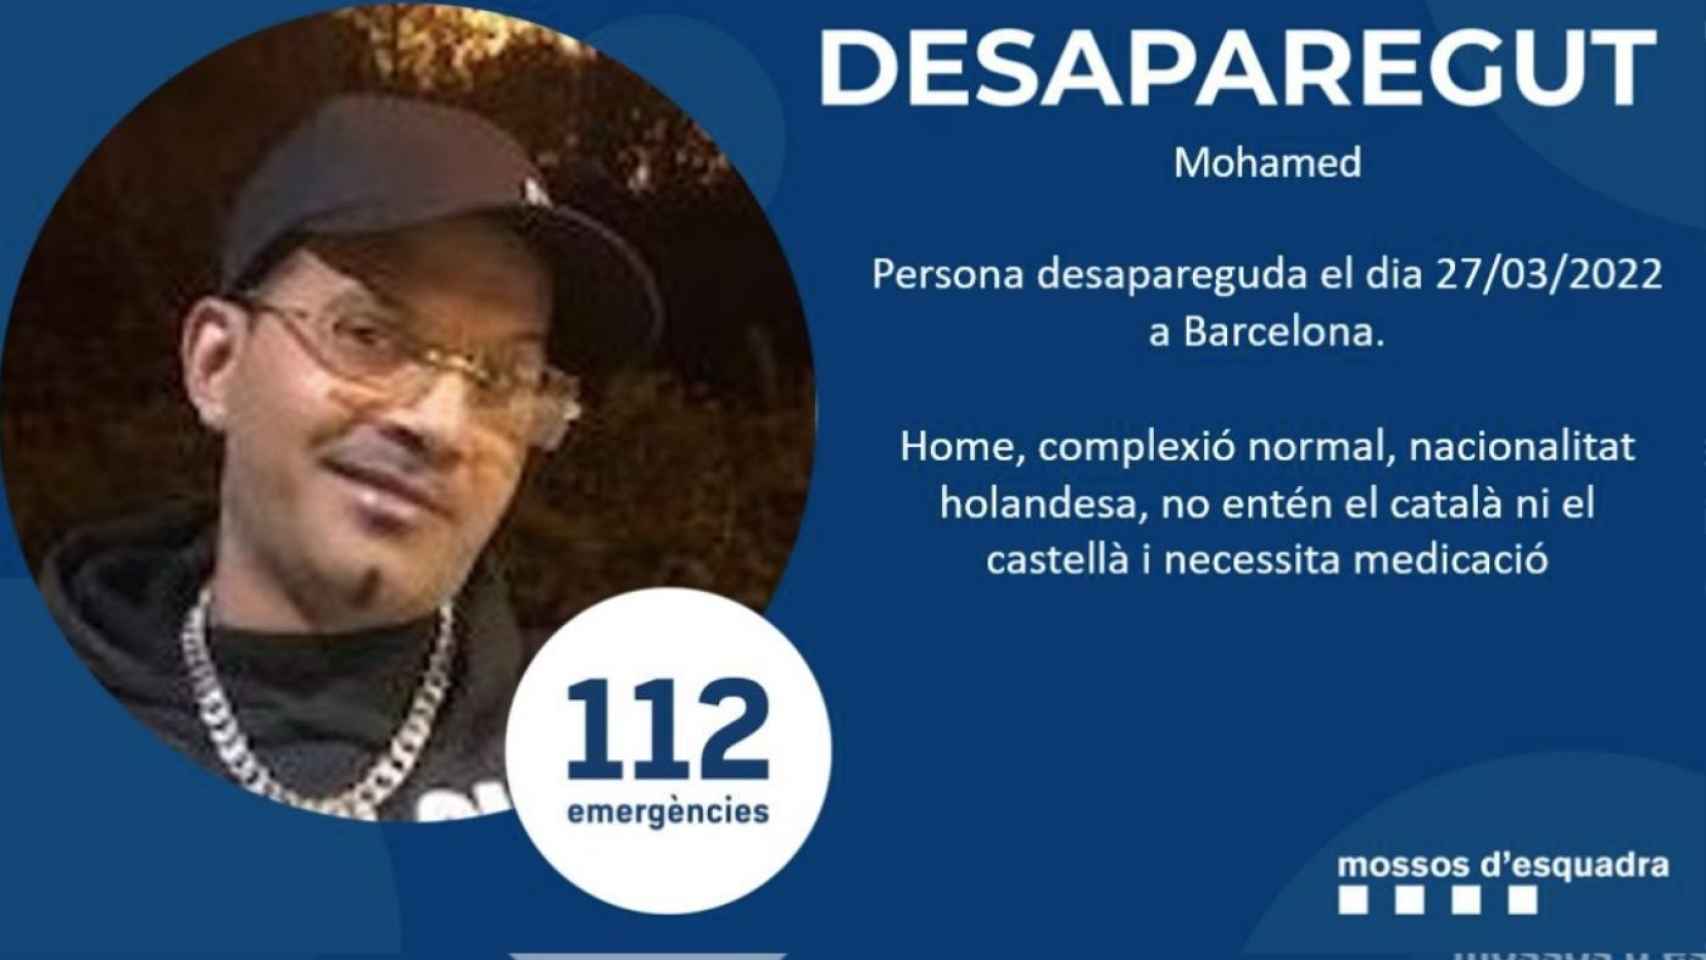 Advertencia de desaparición de Mohamed, un holandés desaparecido en Barcelona que necesita mediación / MOSSOS D'ESQUADRA